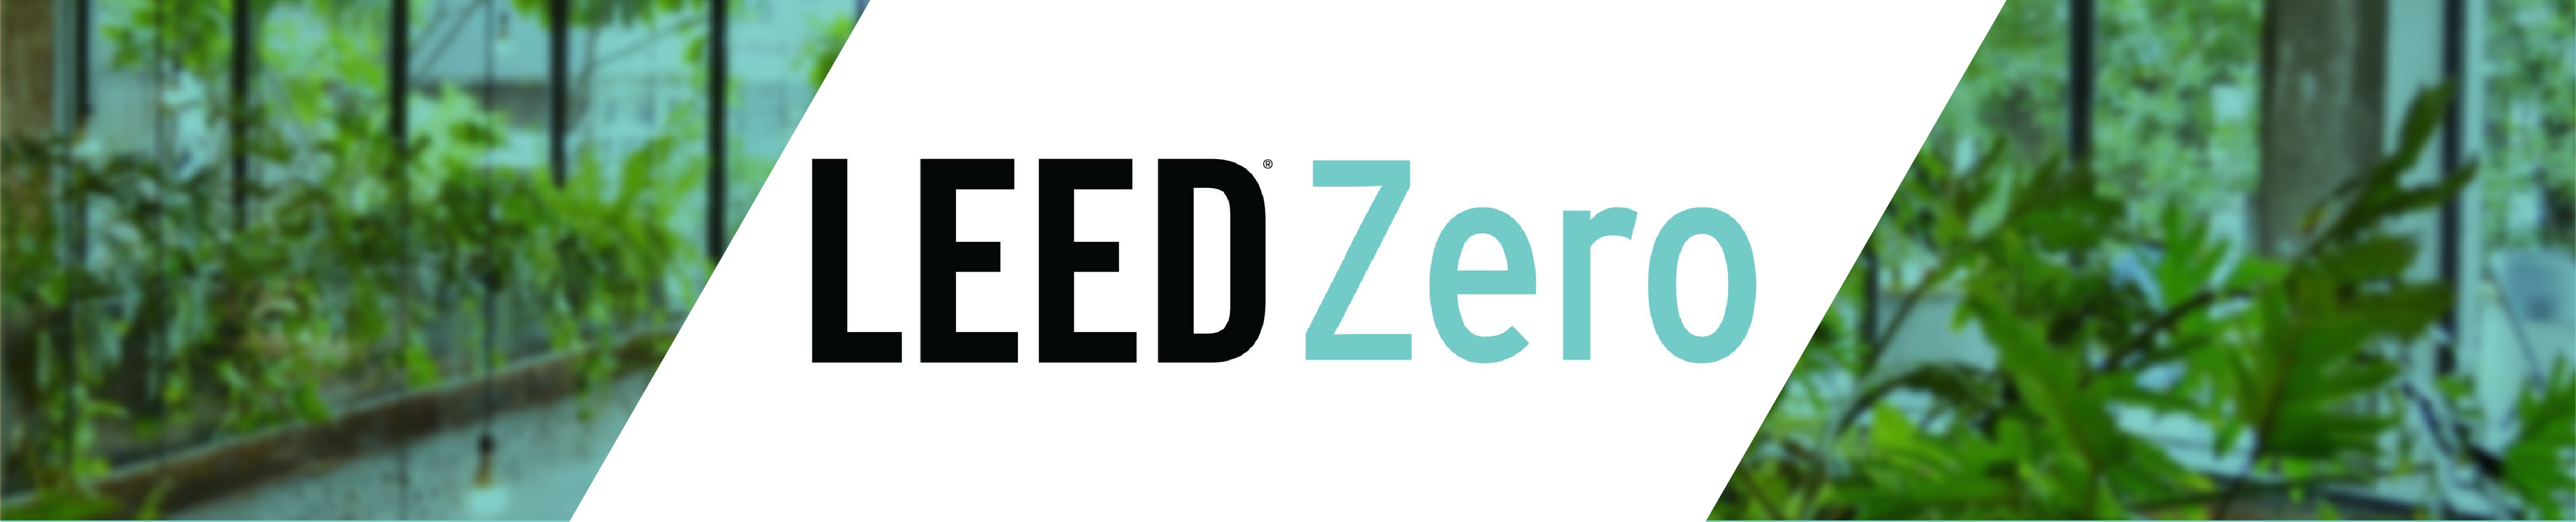 LEED Zero logo